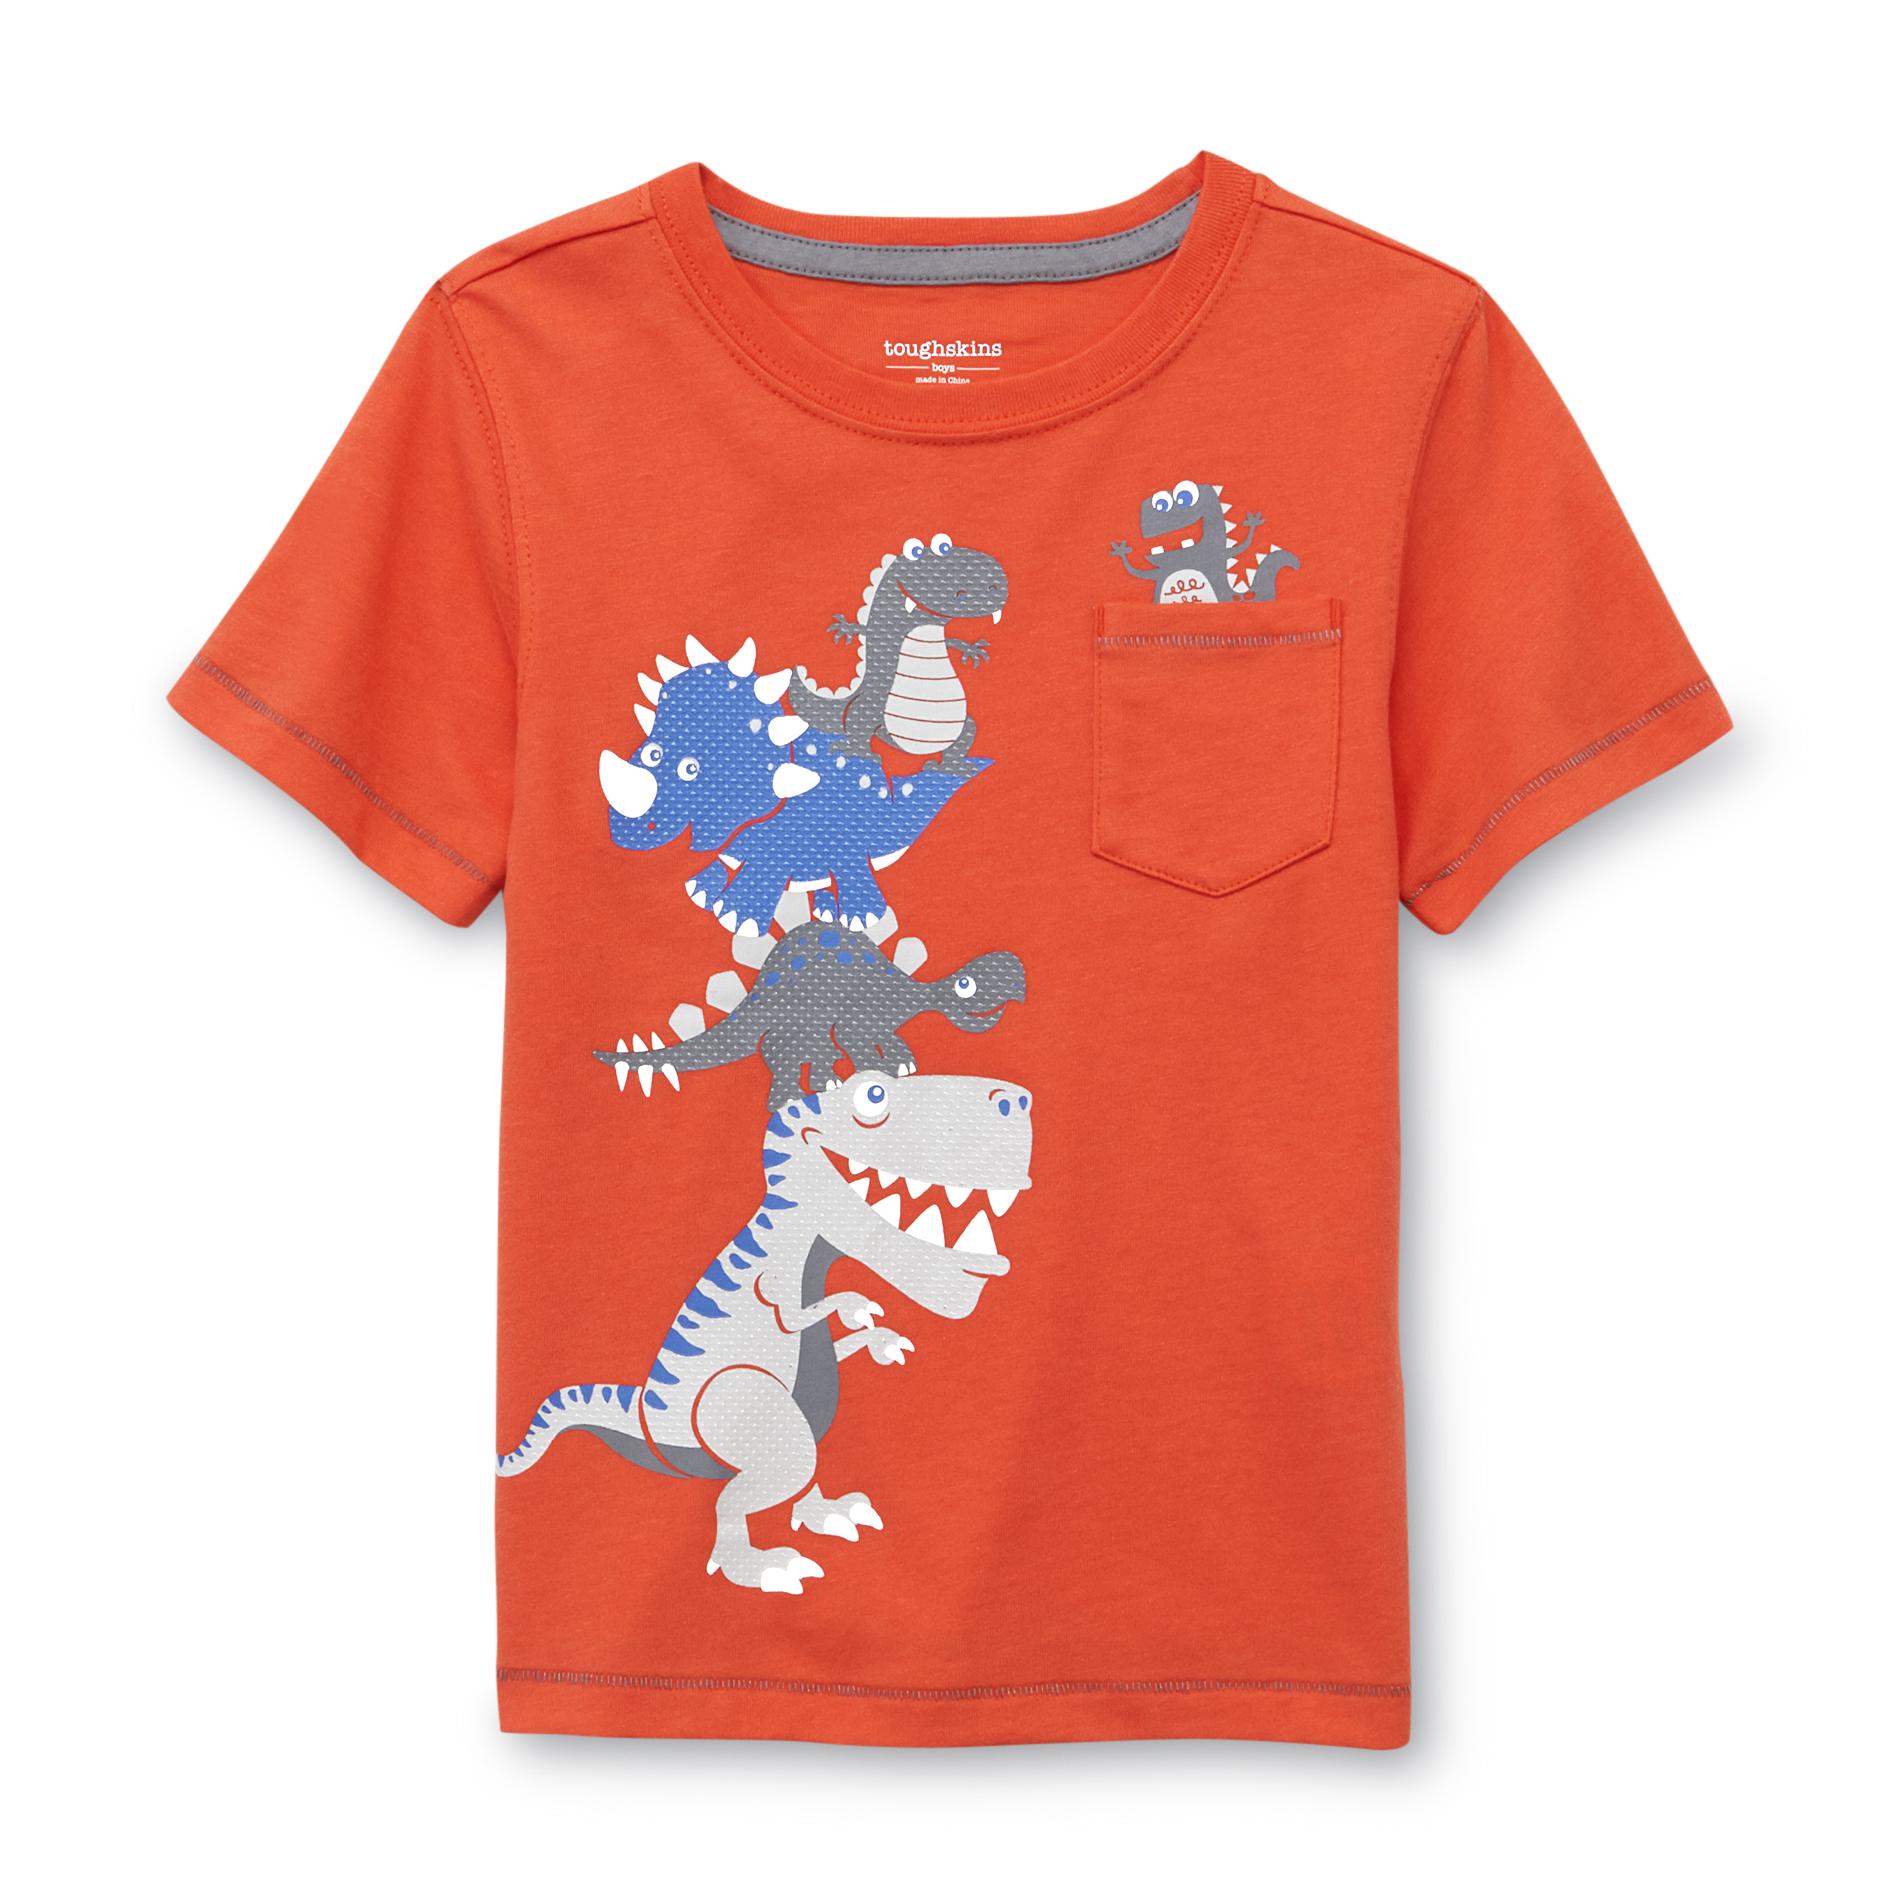 Toughskins Infaant & Toddler Boy's Graphic T-Shirt - Dinosaurs